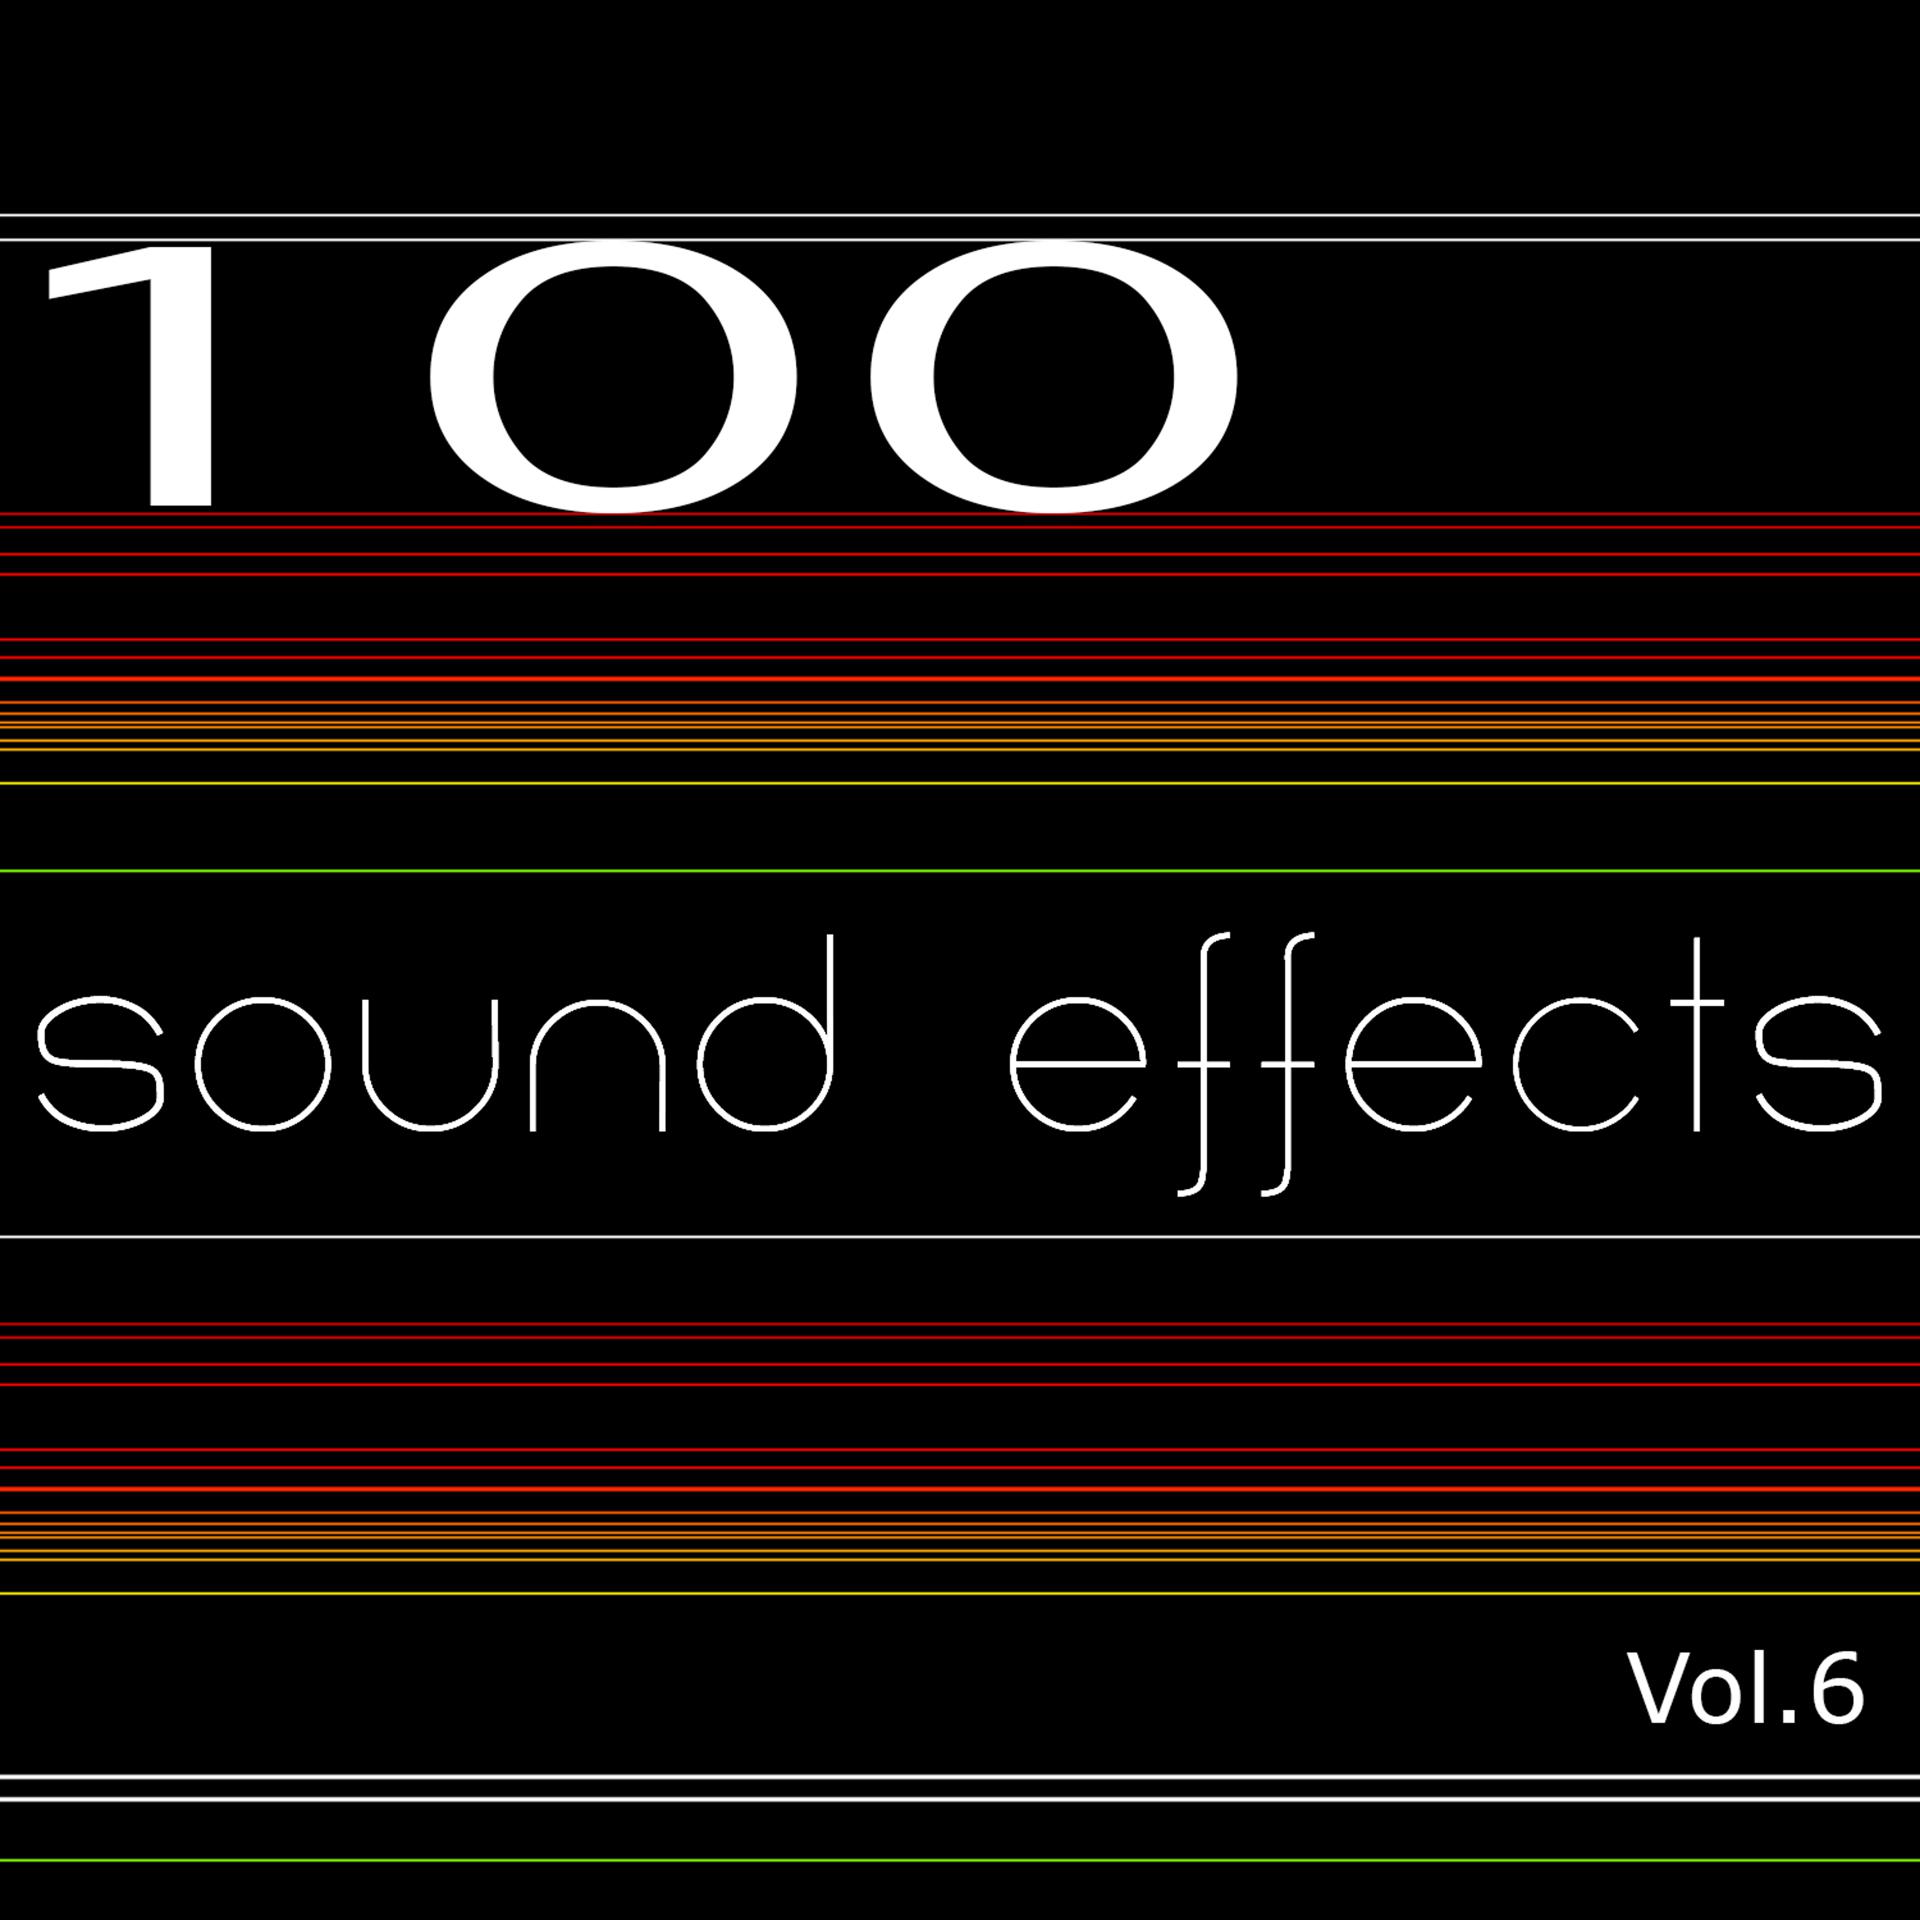 Sound Effect. Ll Sound. C Sound. Group effects